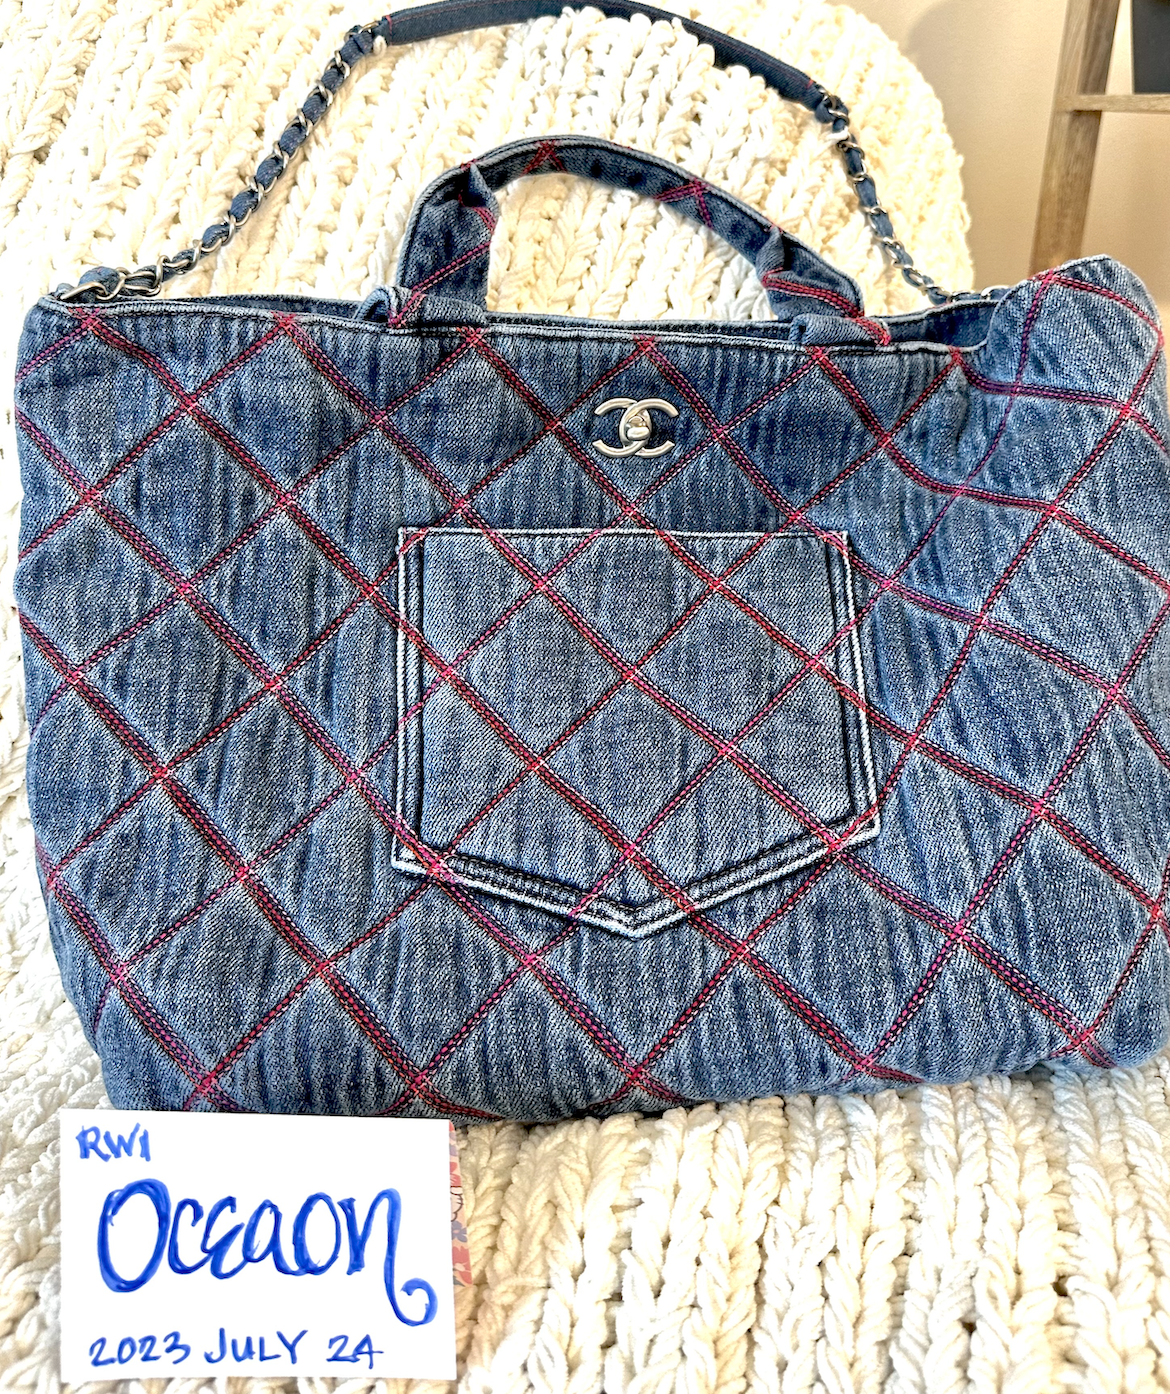 CHANEL Denim Stitched Coco Beach Messenger Bag Blue 1090526